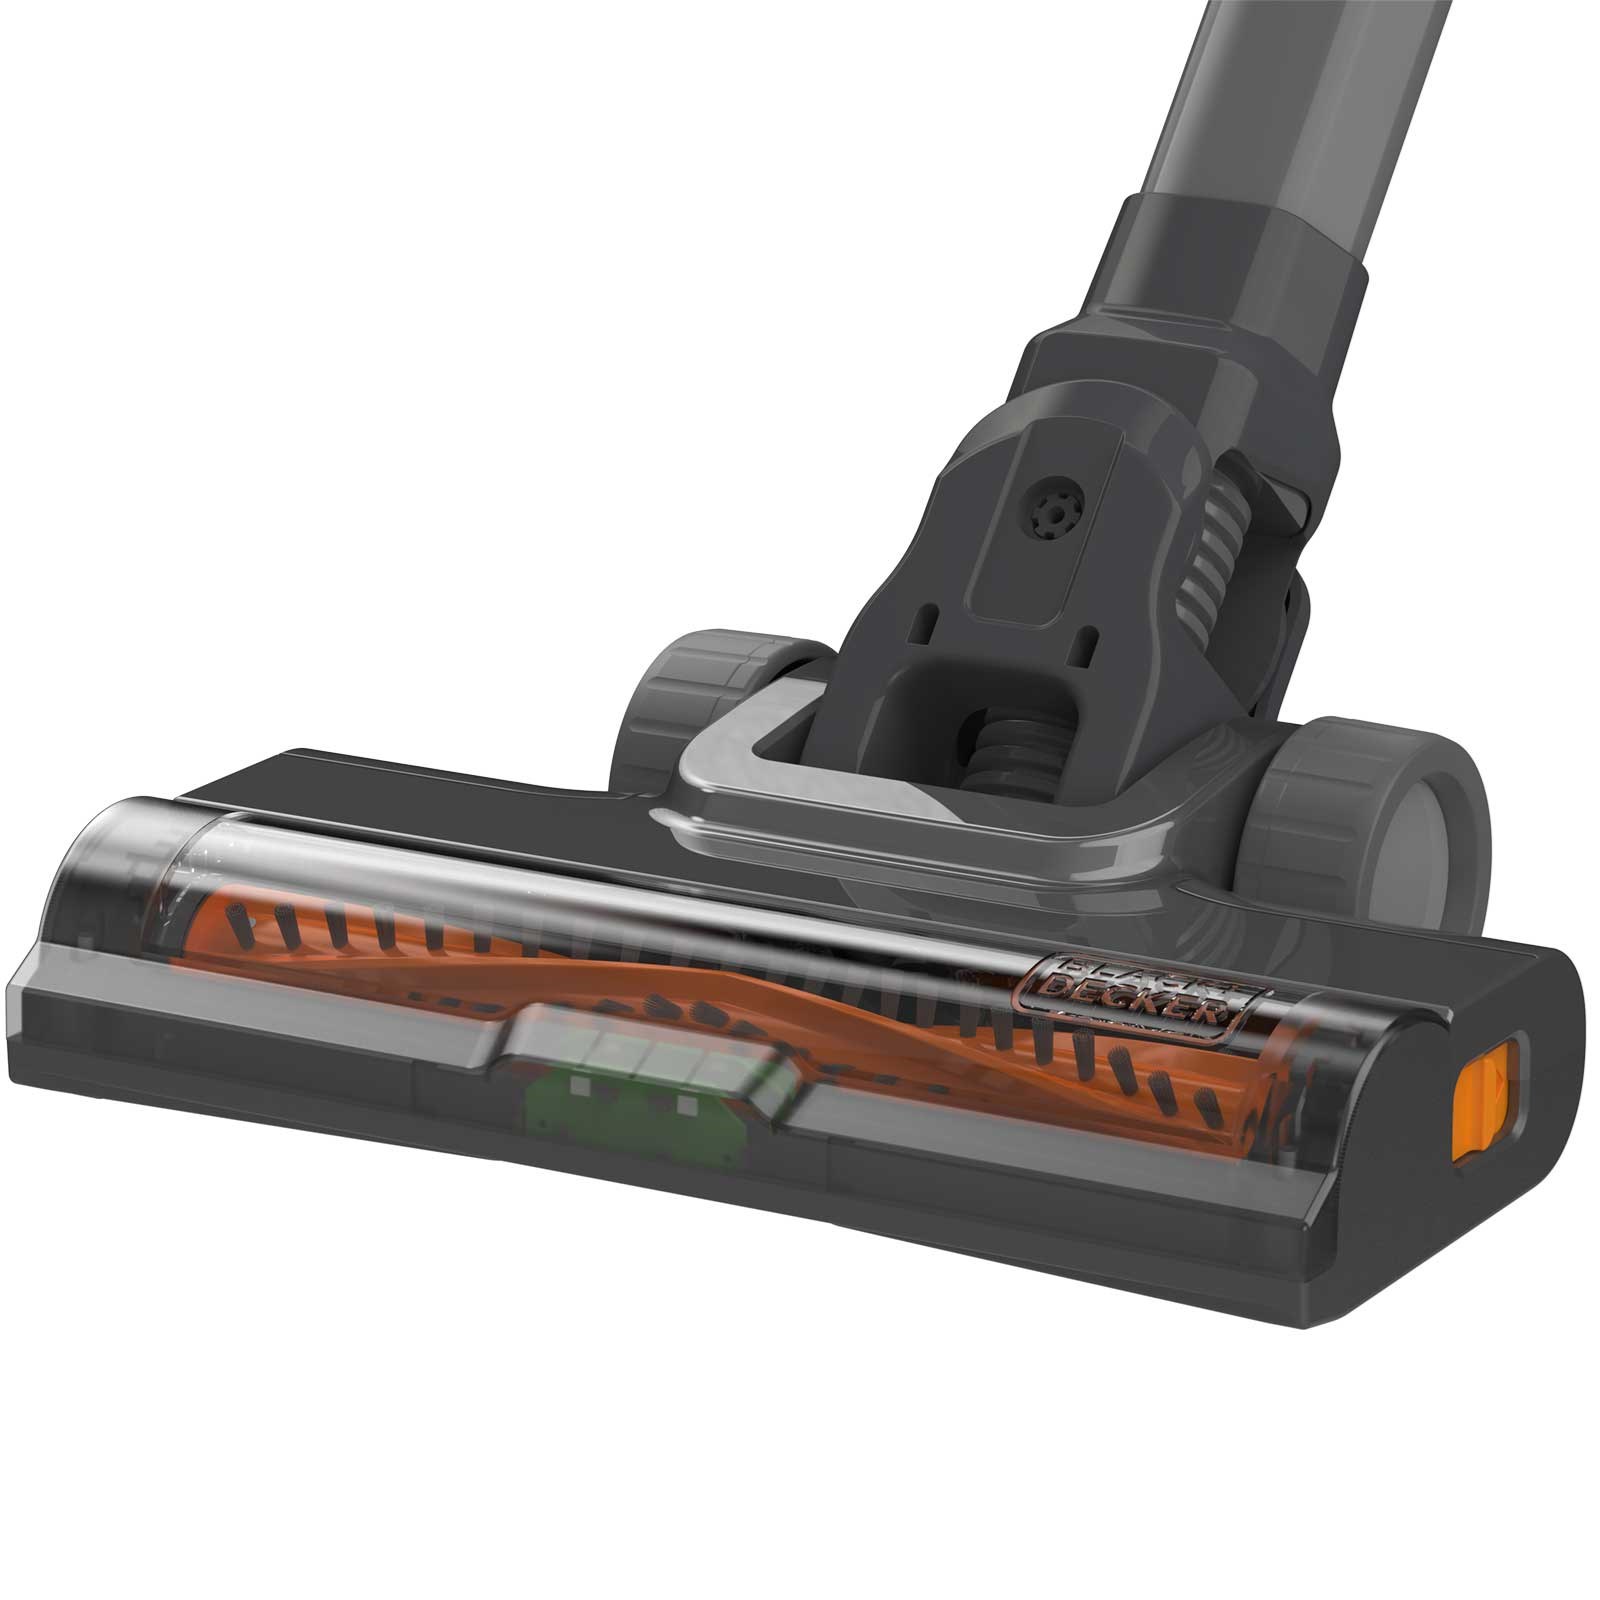 Black & Decker Engine Belt broom Vacuum Cleaner Powerseries Bhfev Bdpse 18V